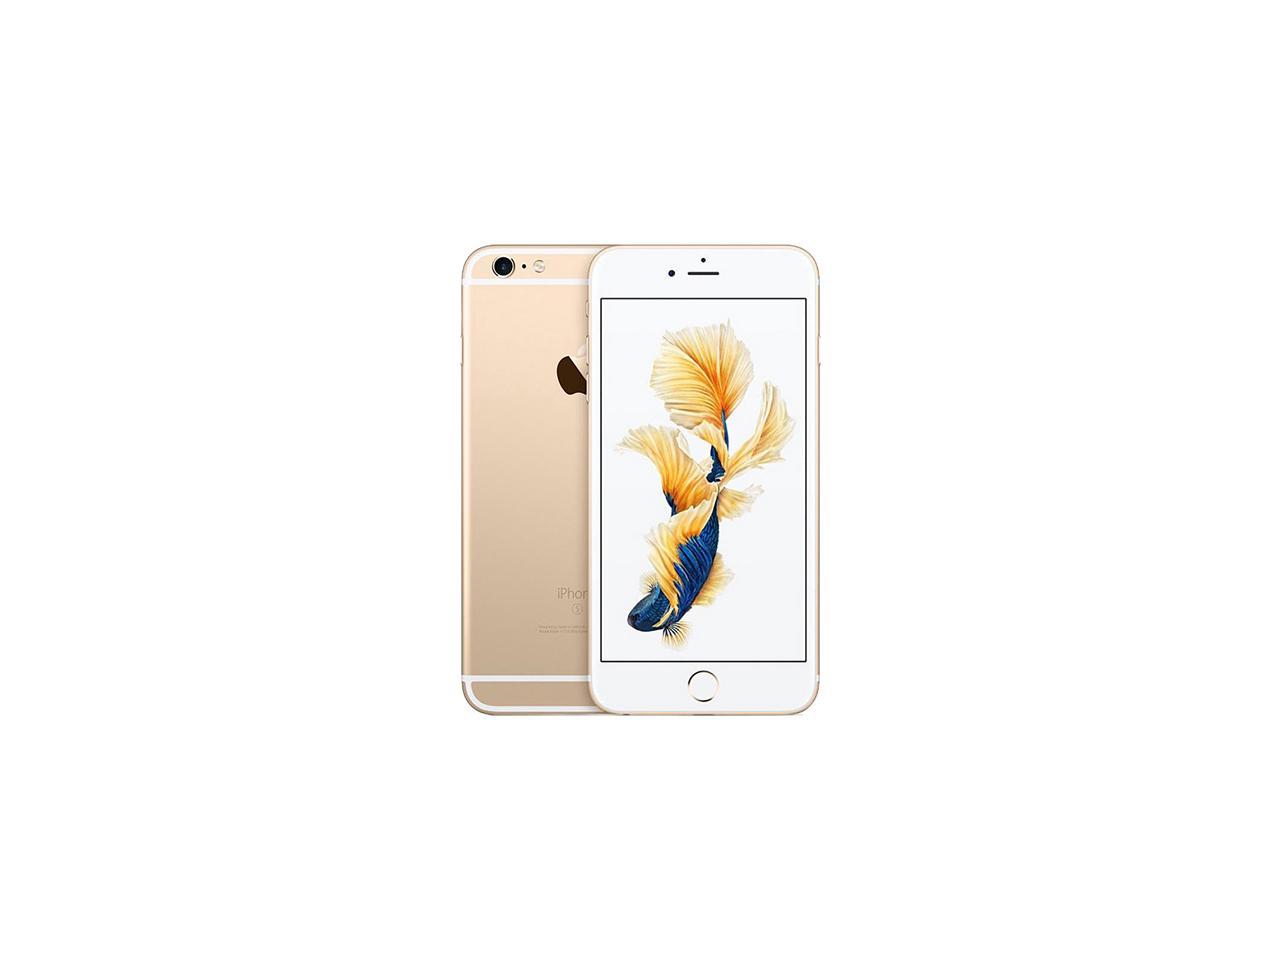 Apple iPhone 6s 16GB 4G LTE Unlocked Cell Phone 2GB RAM (Gold)